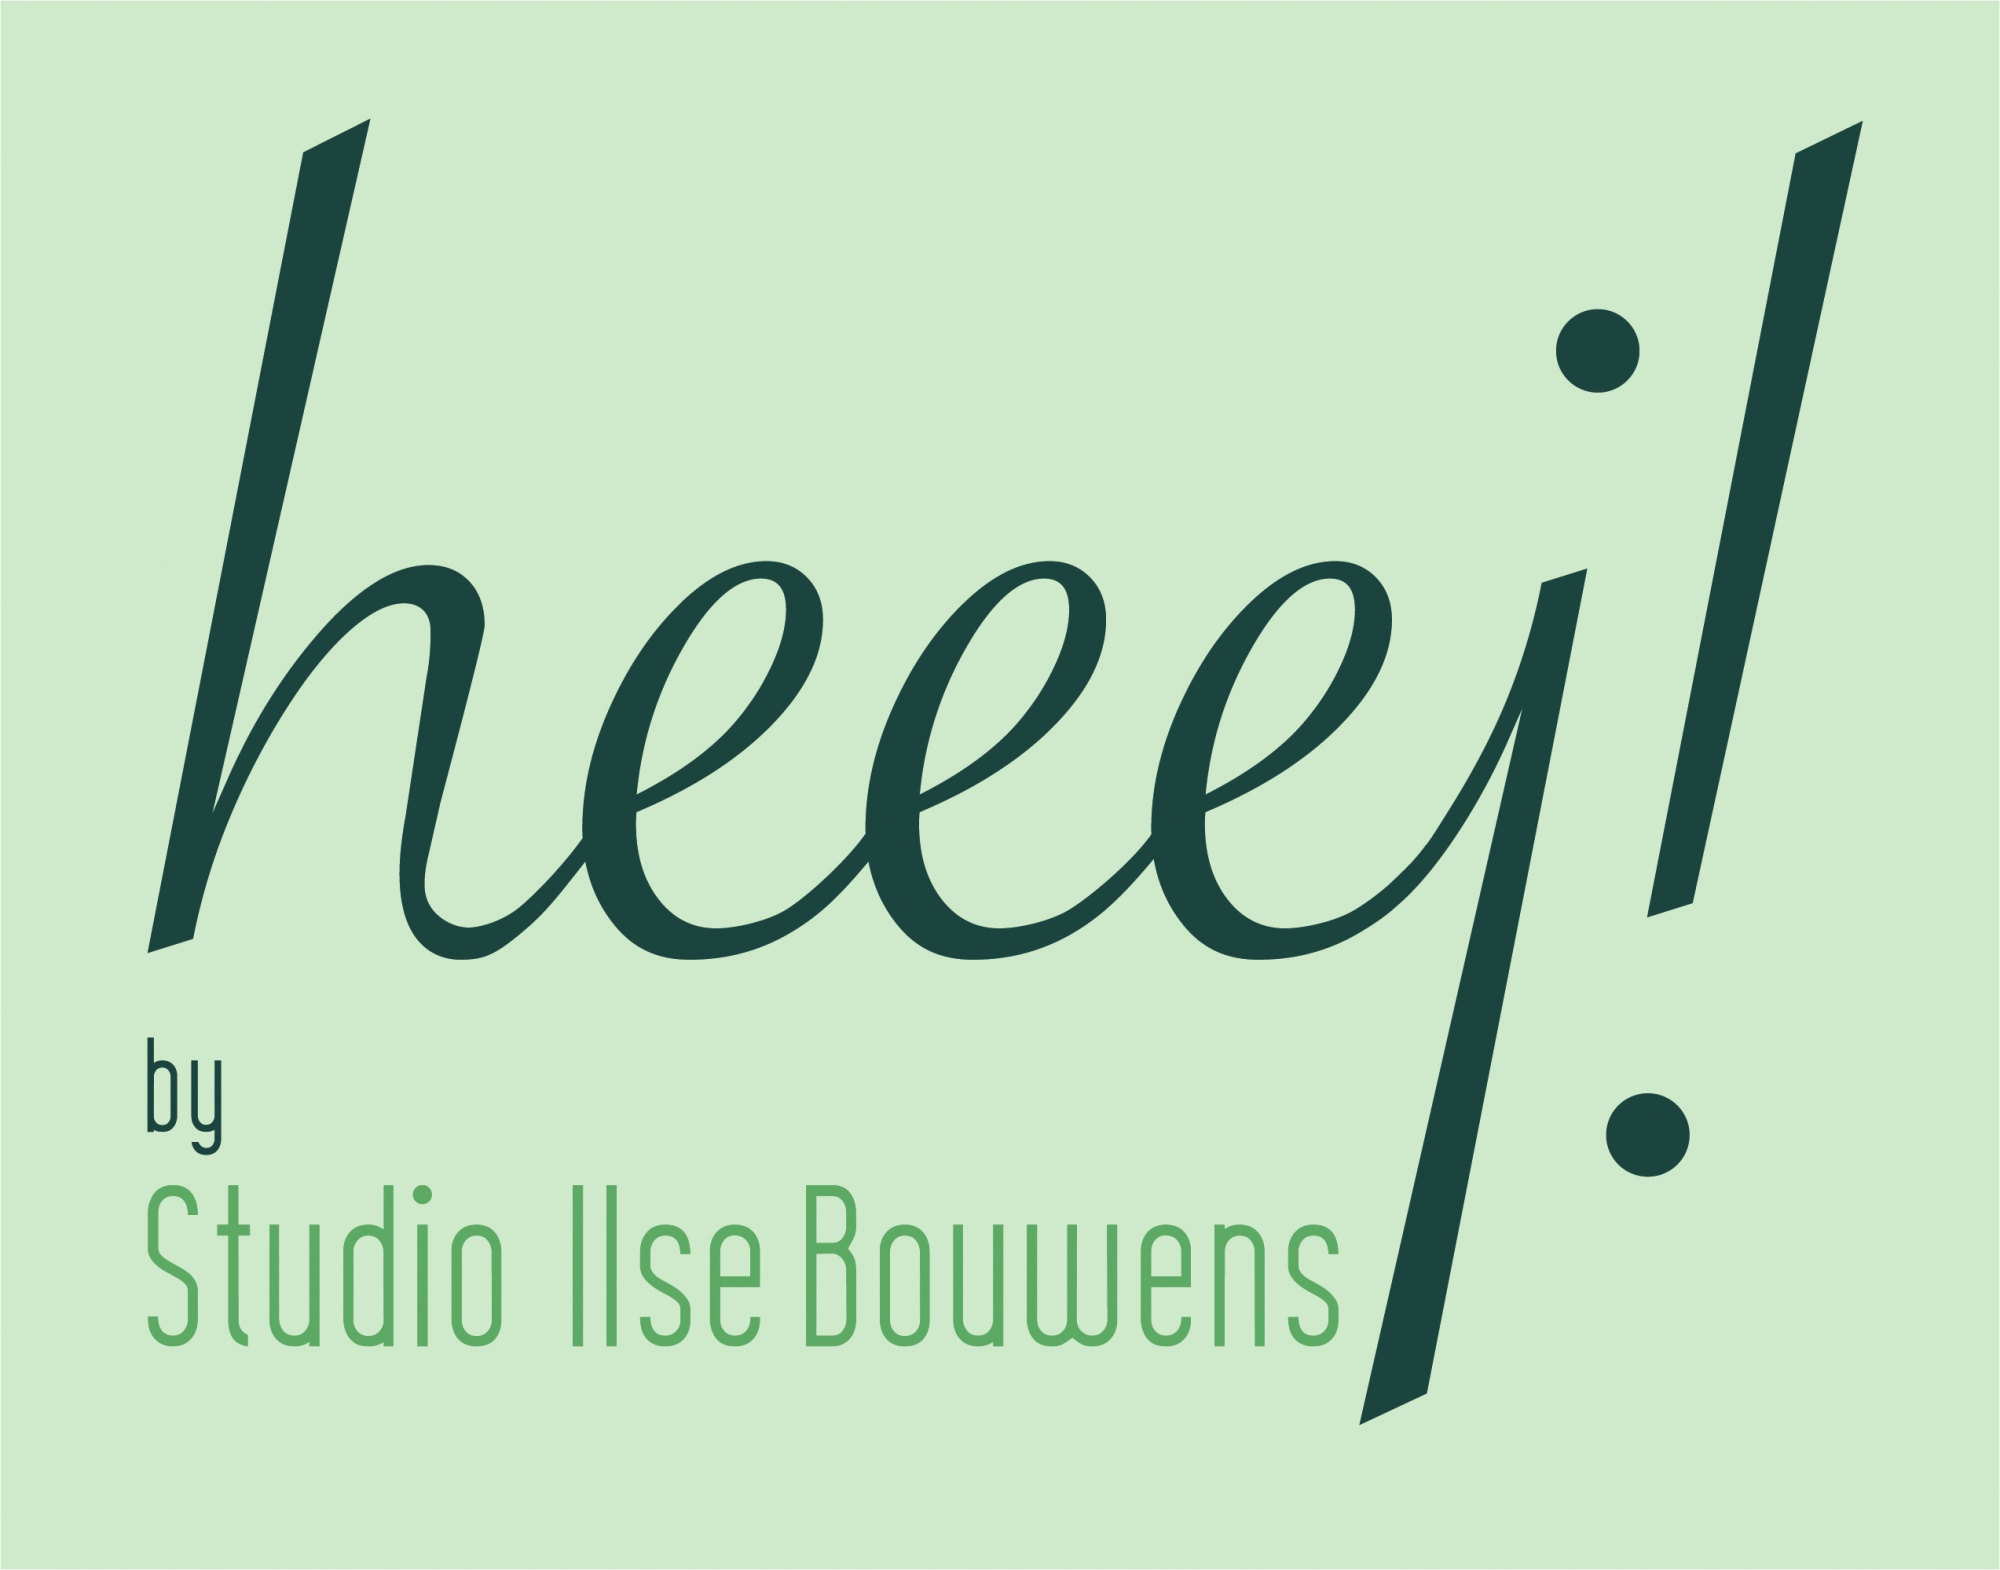 Heeej! by Studio Ilse Bouwens